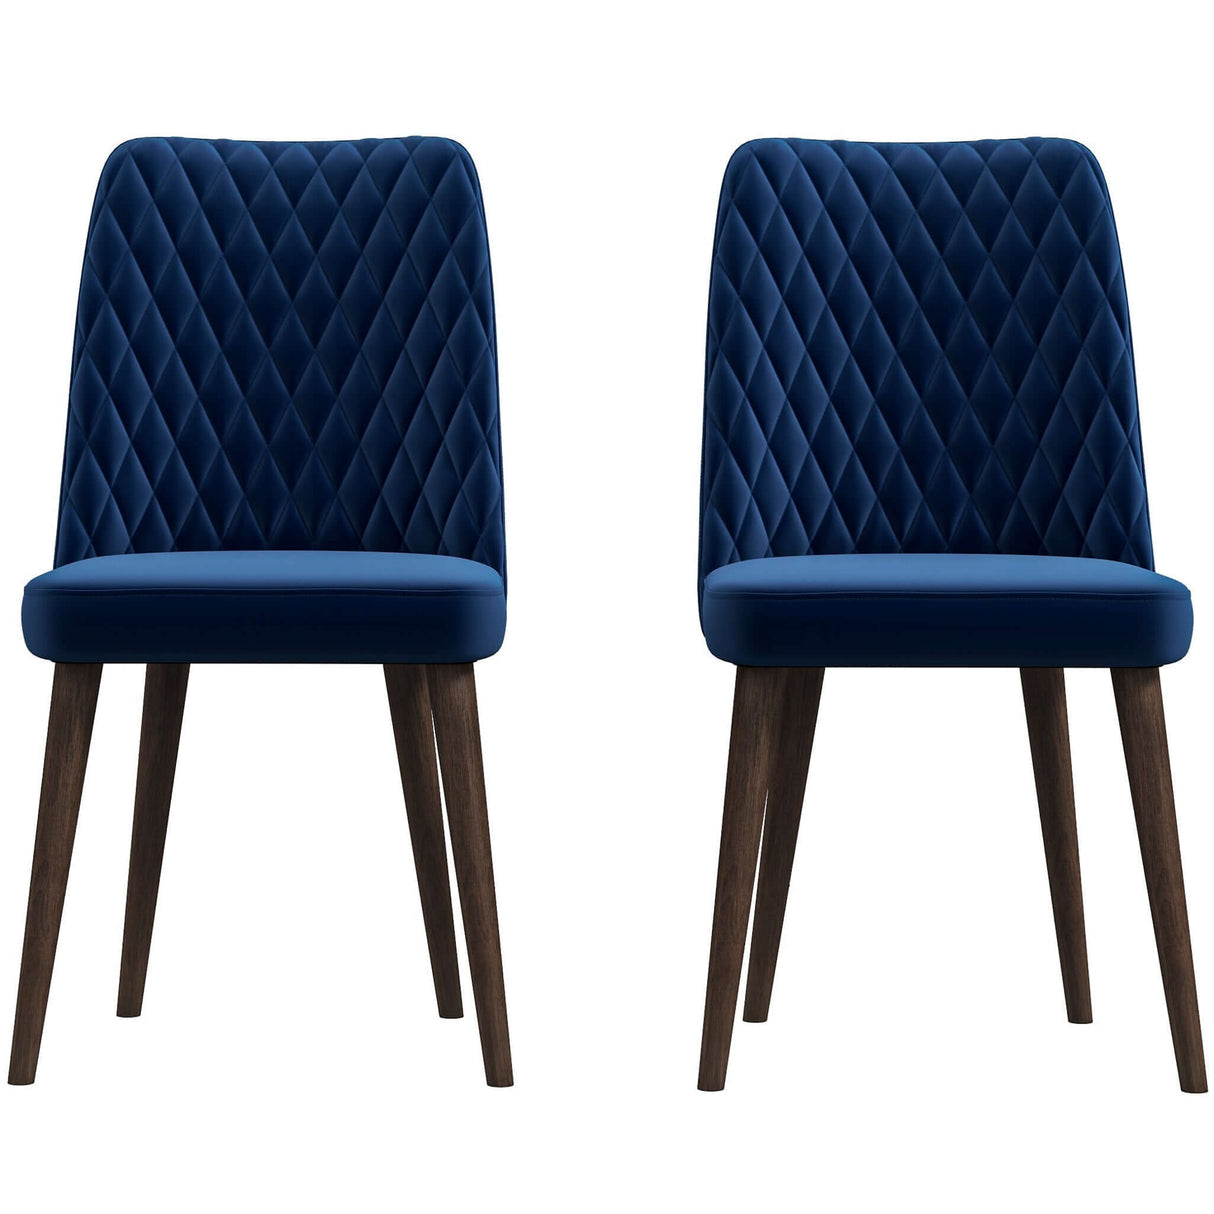 Katie Mid-Century Modern Velvet Dining Chair (Set of 2) Navy Blue